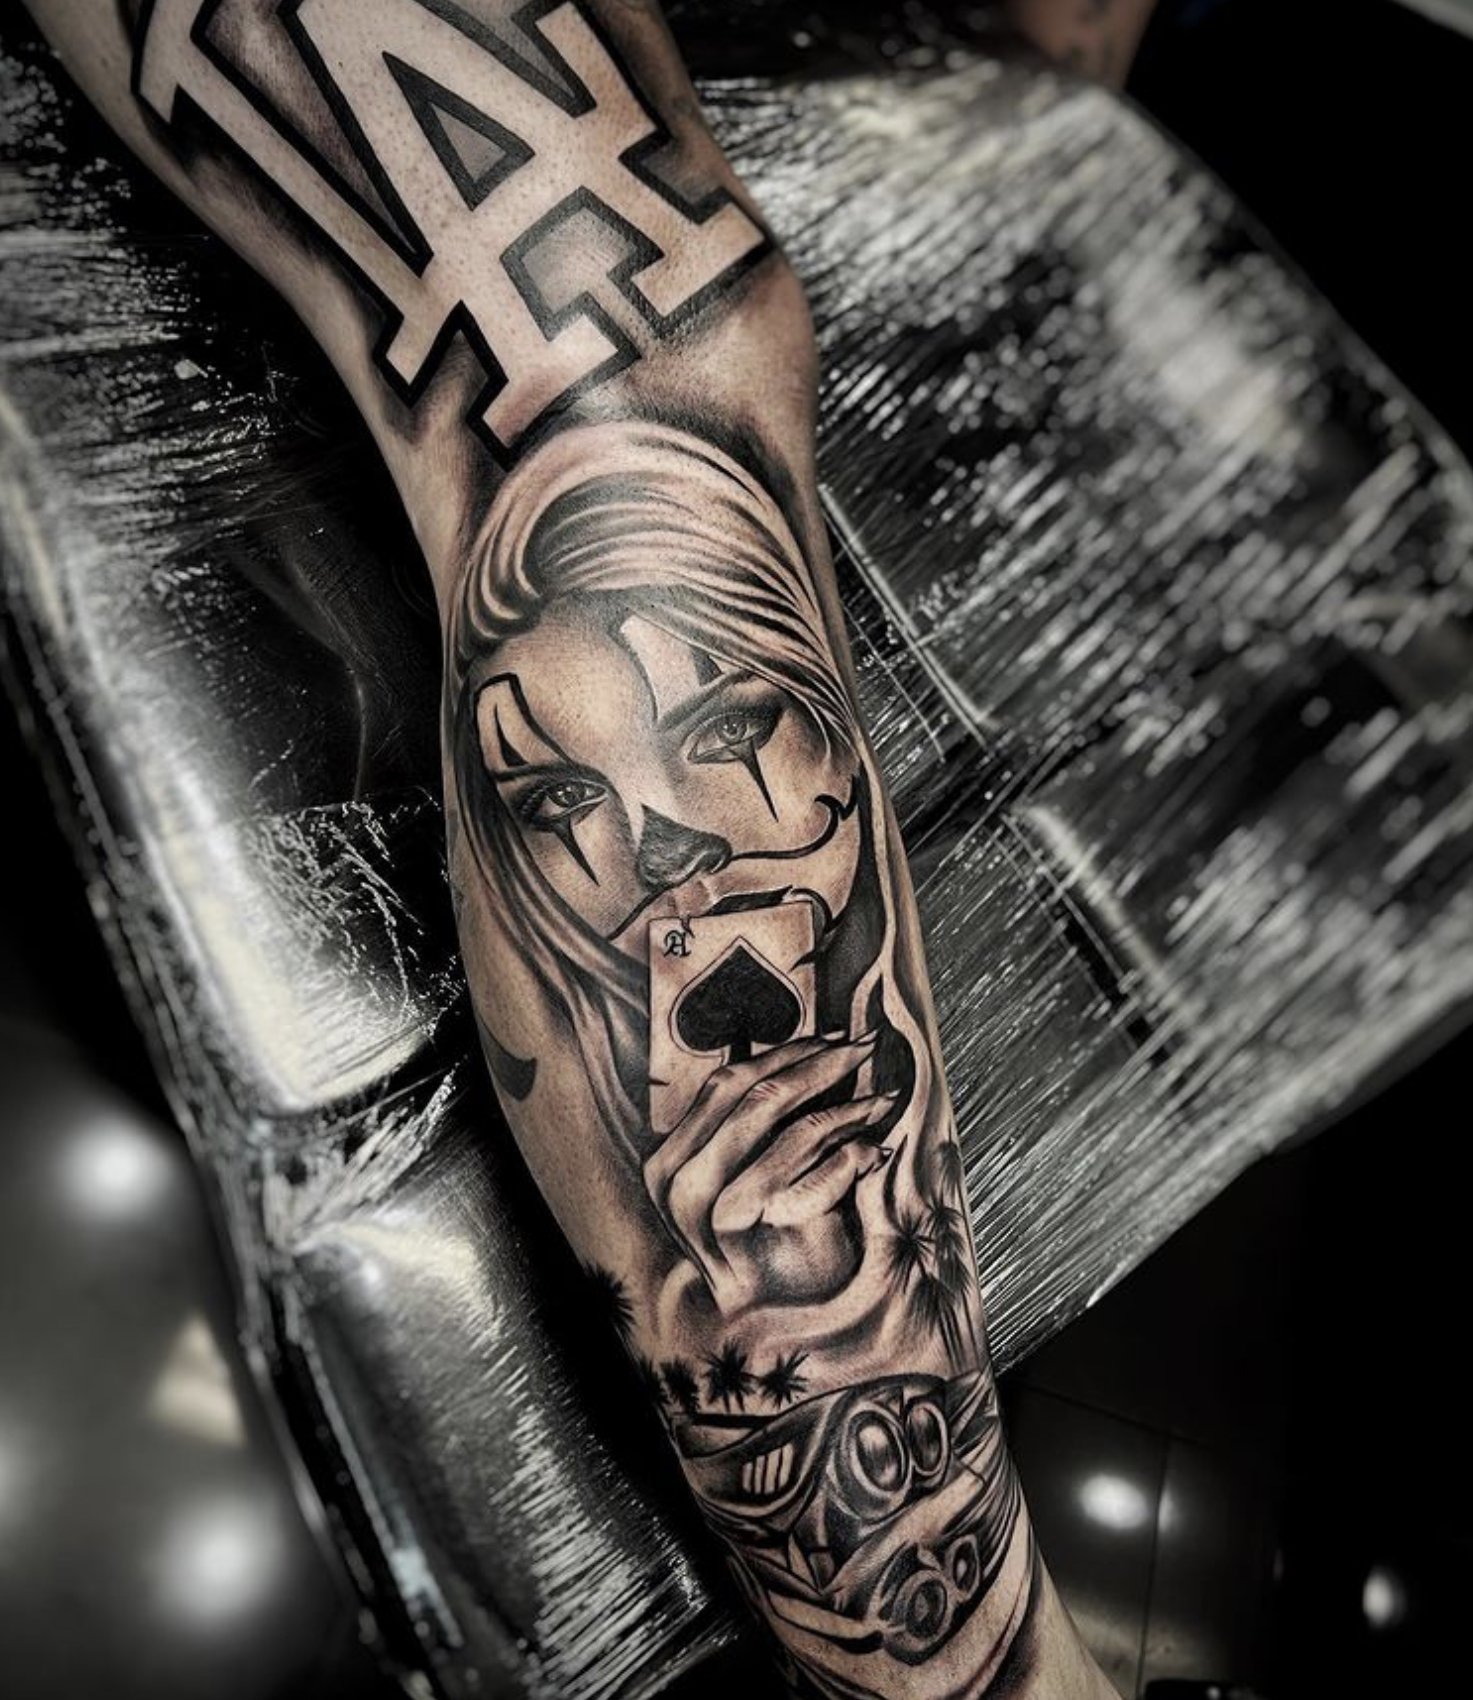 Resident Tattoo Artist - Dennis